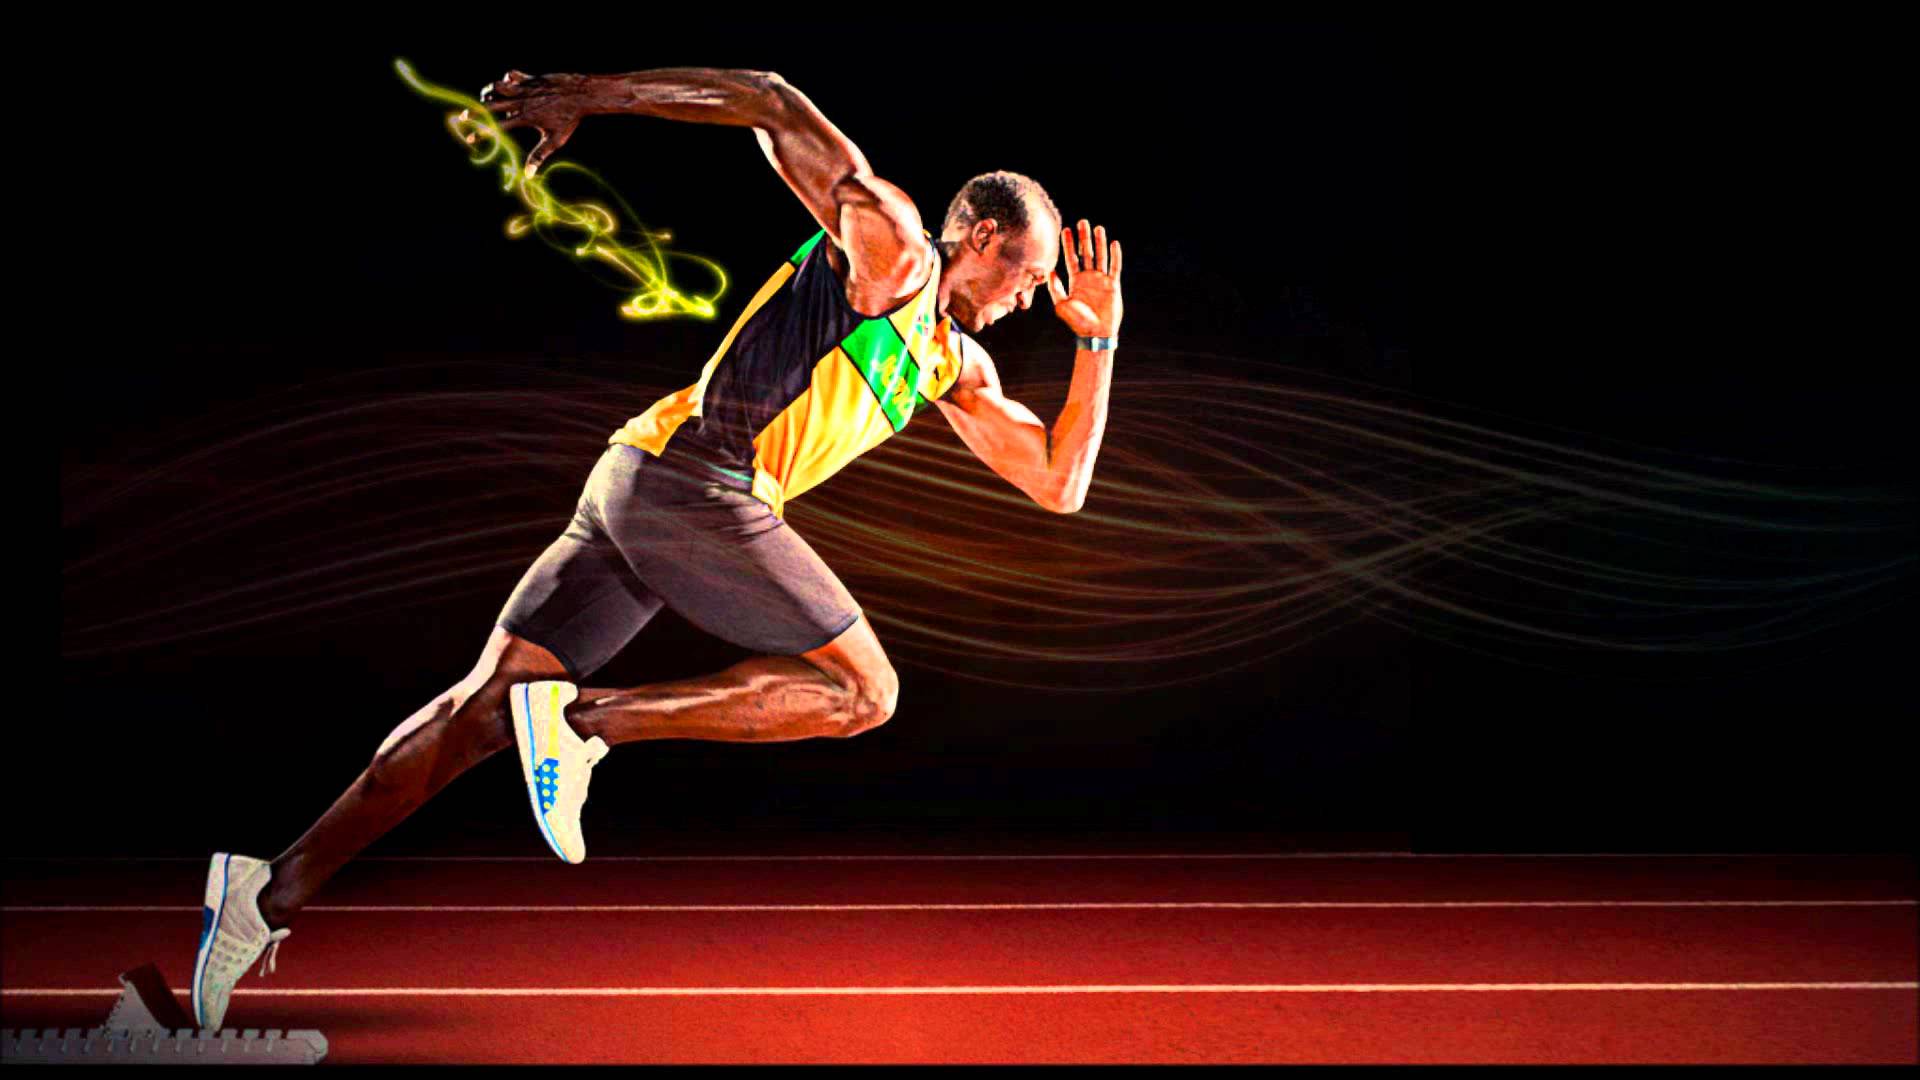 Usain Bolt Wallpaper 1080p T9ug81r 4usky